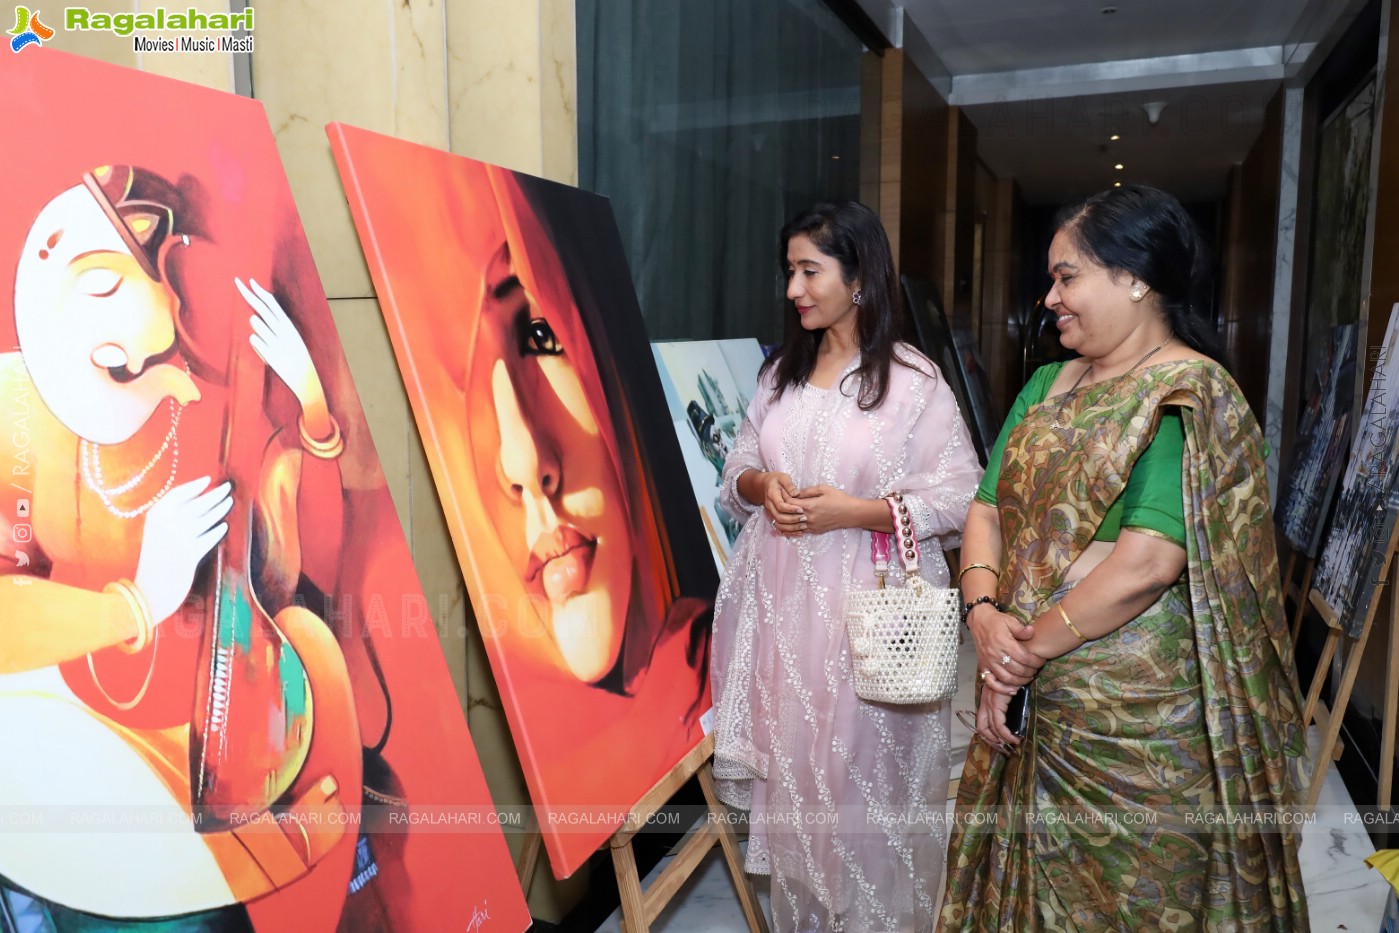 Inauguration of Charity Exhibition Paintings at Taj Vivanta